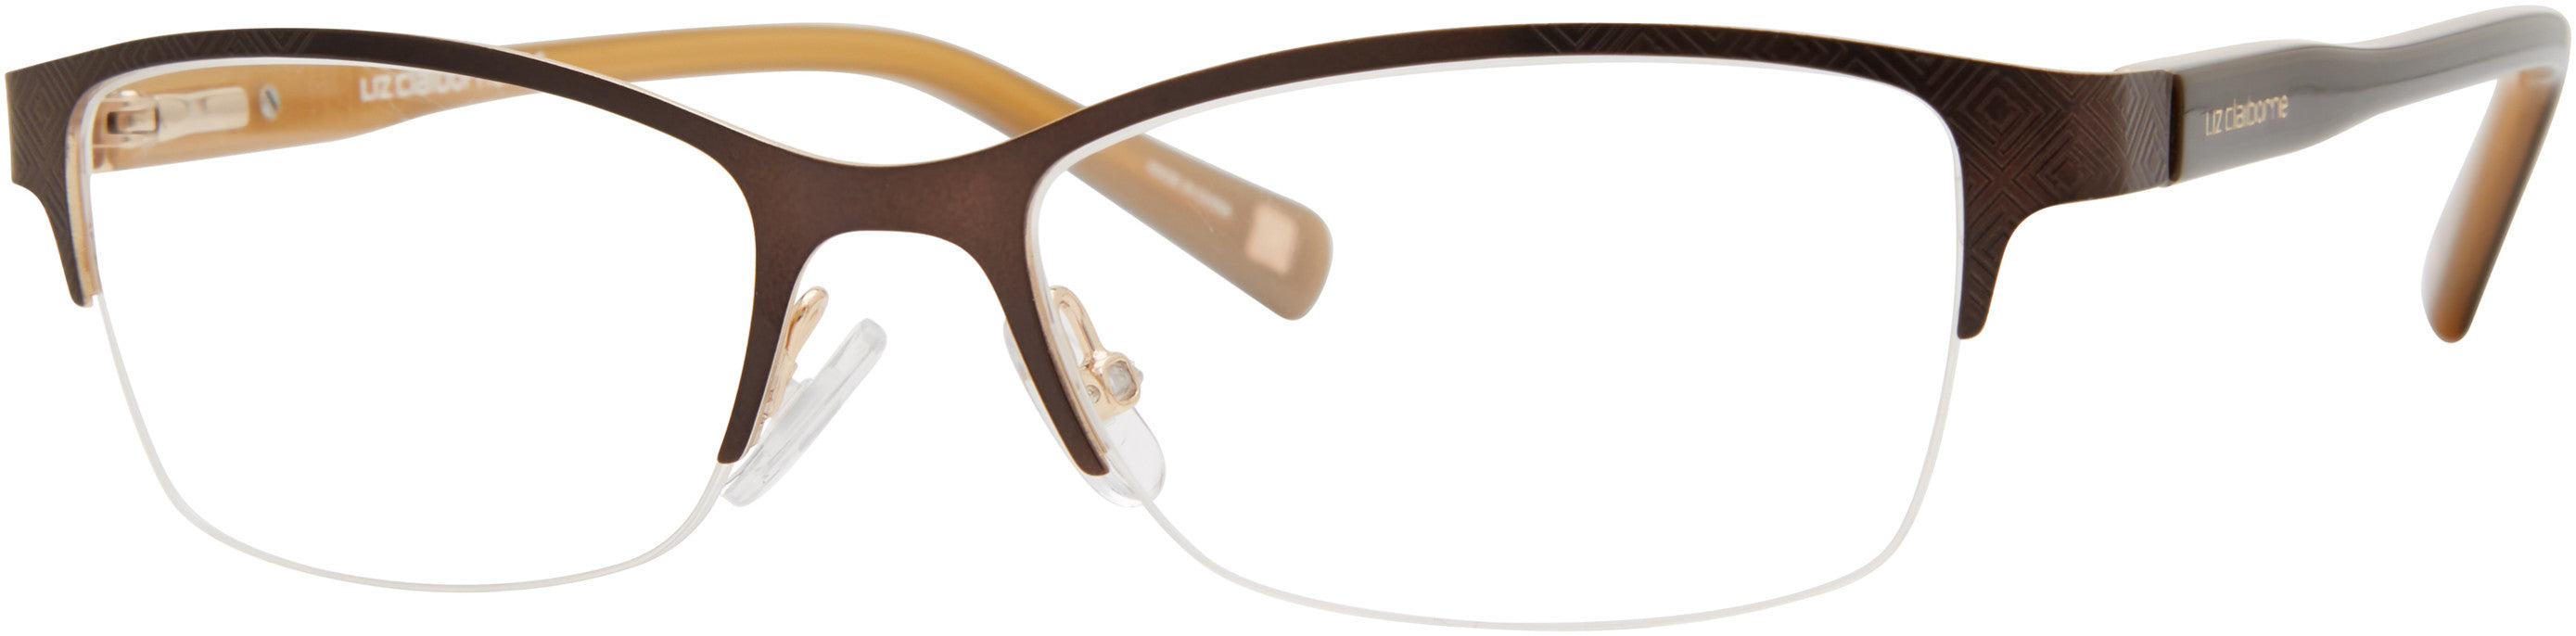  Liz Claiborne 456 Rectangular Eyeglasses 0UFM-0UFM  Bwgd Grid (00 Demo Lens)